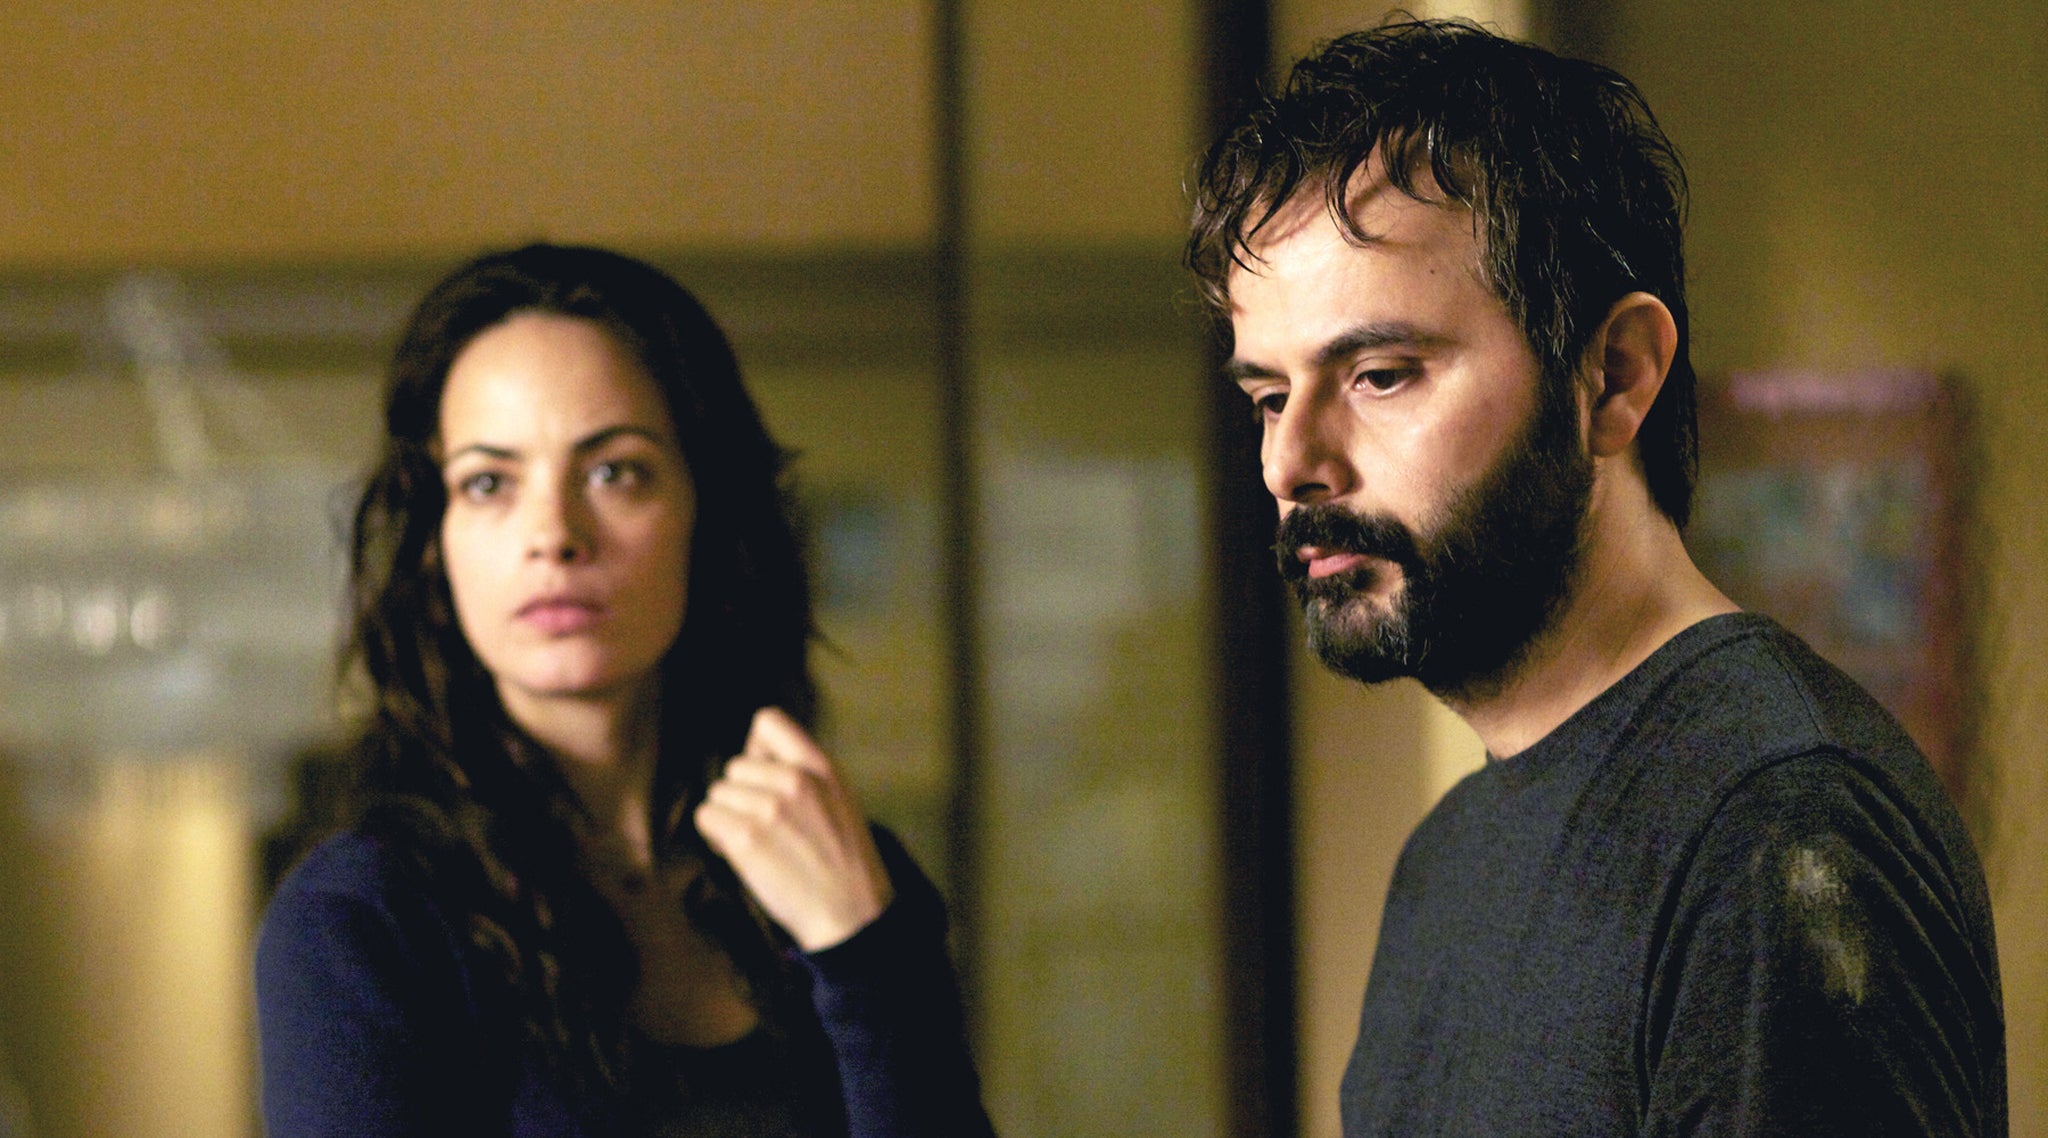 A scene from Asghar Farhadi's new film 'The Past'